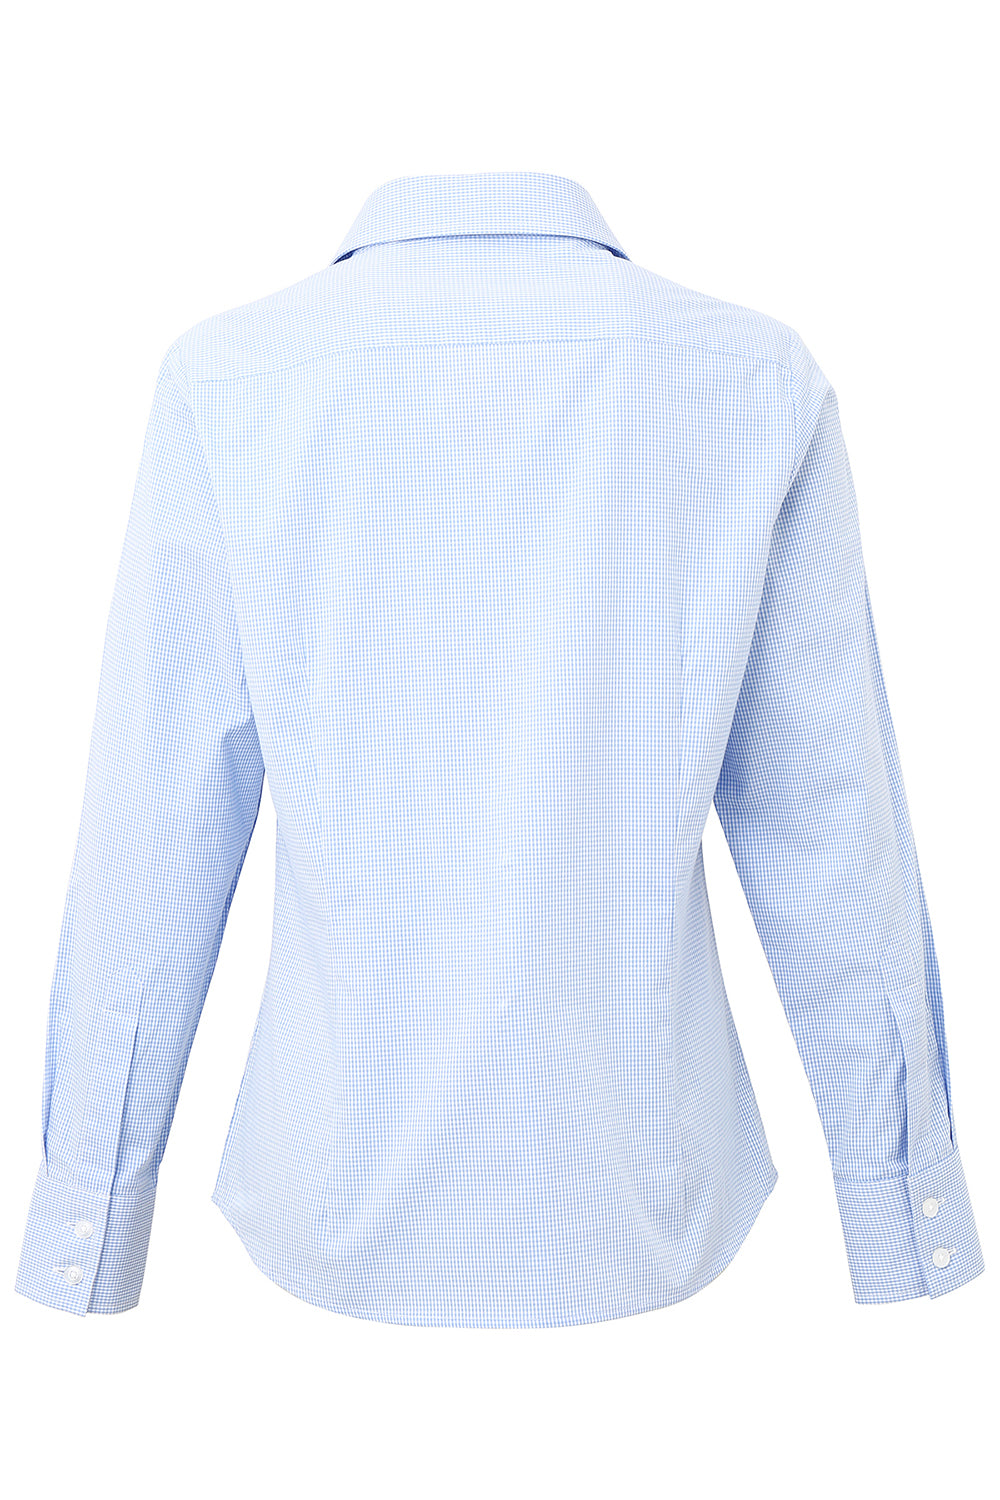 Artisan Collection RP320 Womens Microcheck Gingham Long Sleeve Button Down Shirt Light Blue/White Model Flat Back